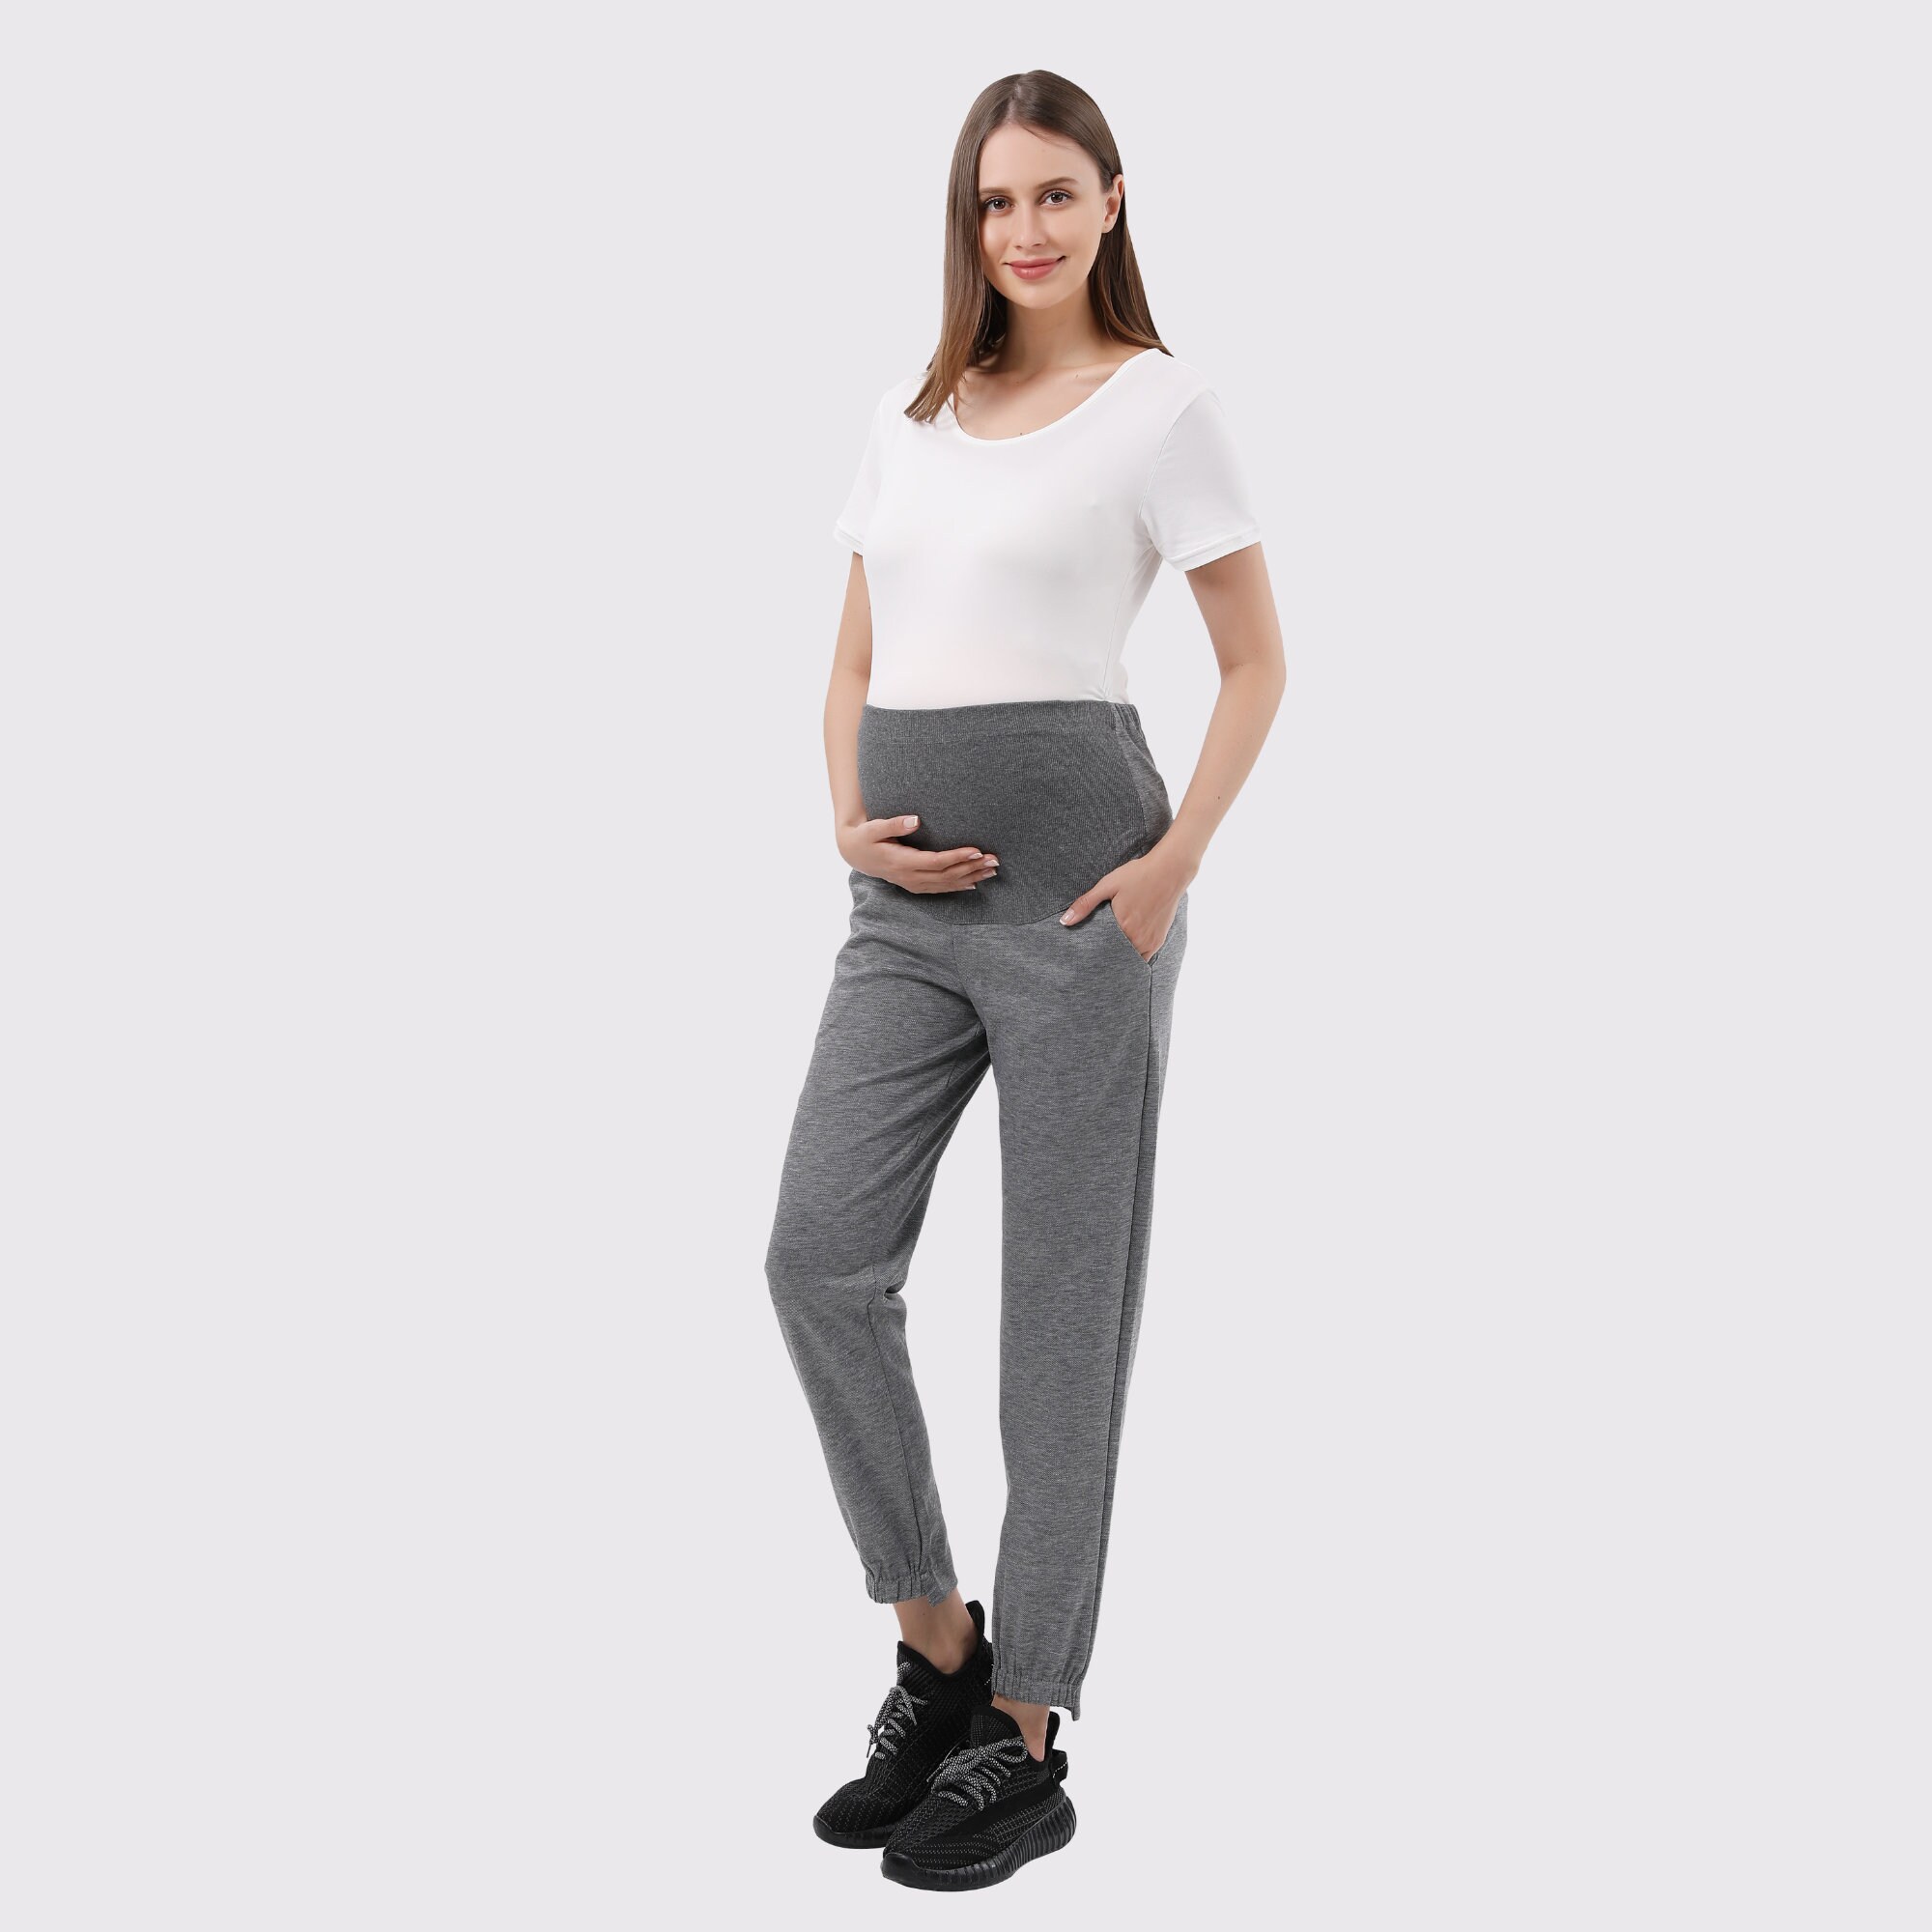 Set of 3 Maternity Pregnancy Adjustable Waist Jeans Trousers Band Belt  Extender Elastic 